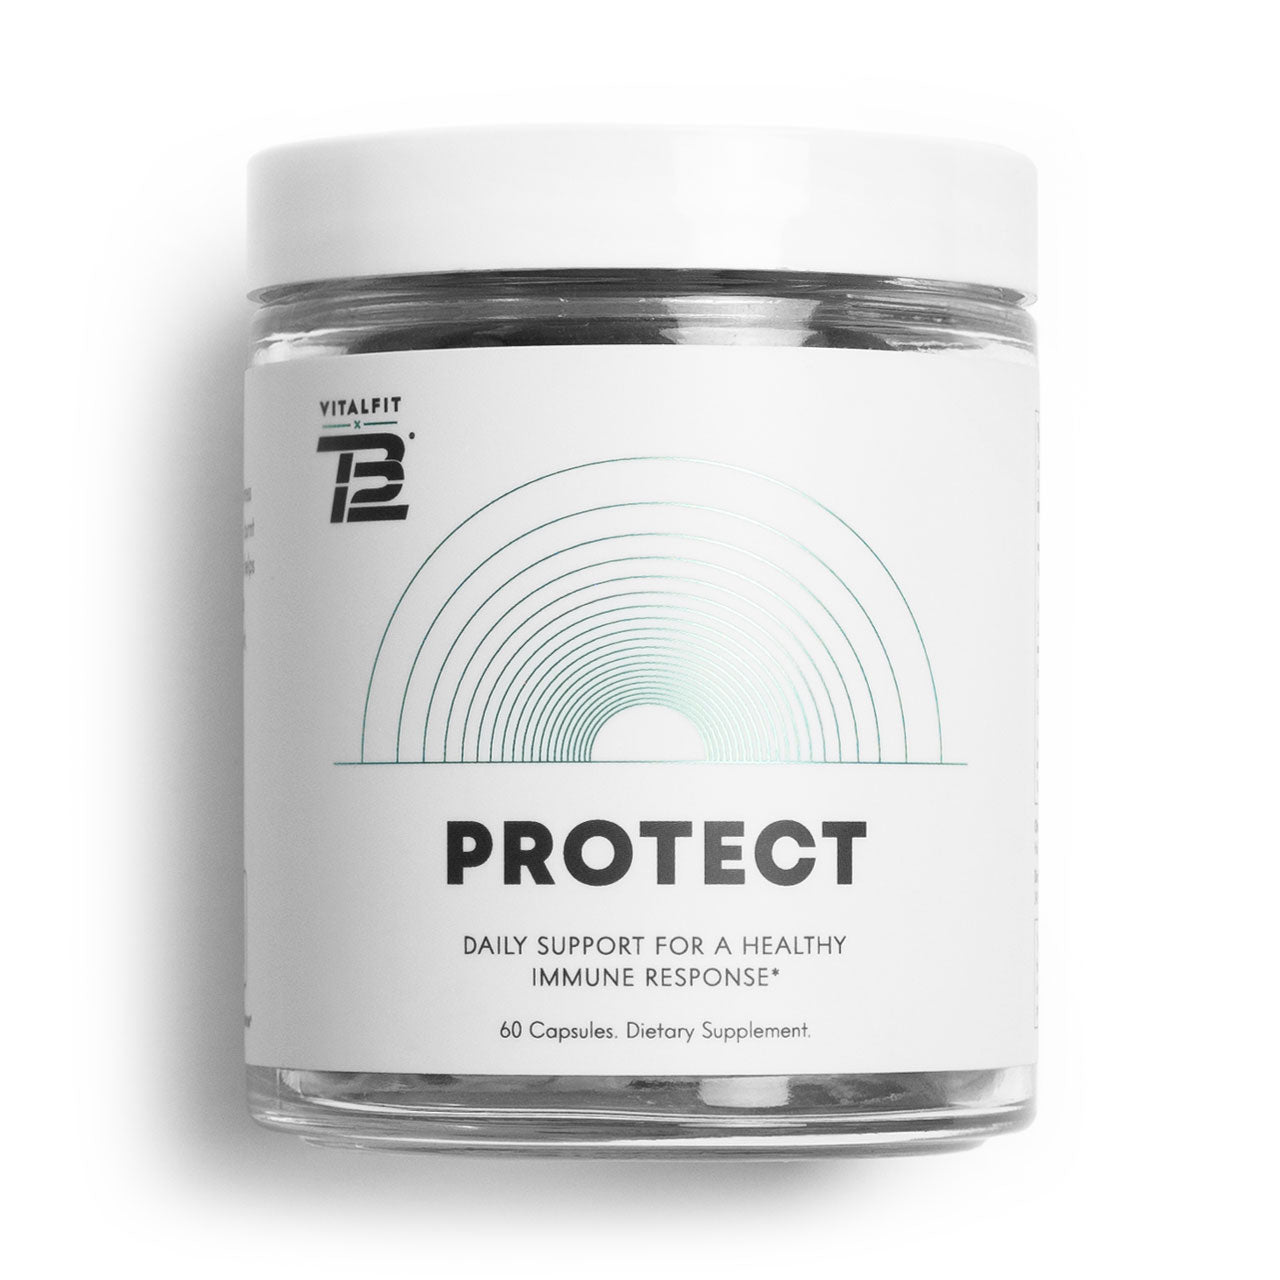 VitalFit x TB12 Protect Immunity Support